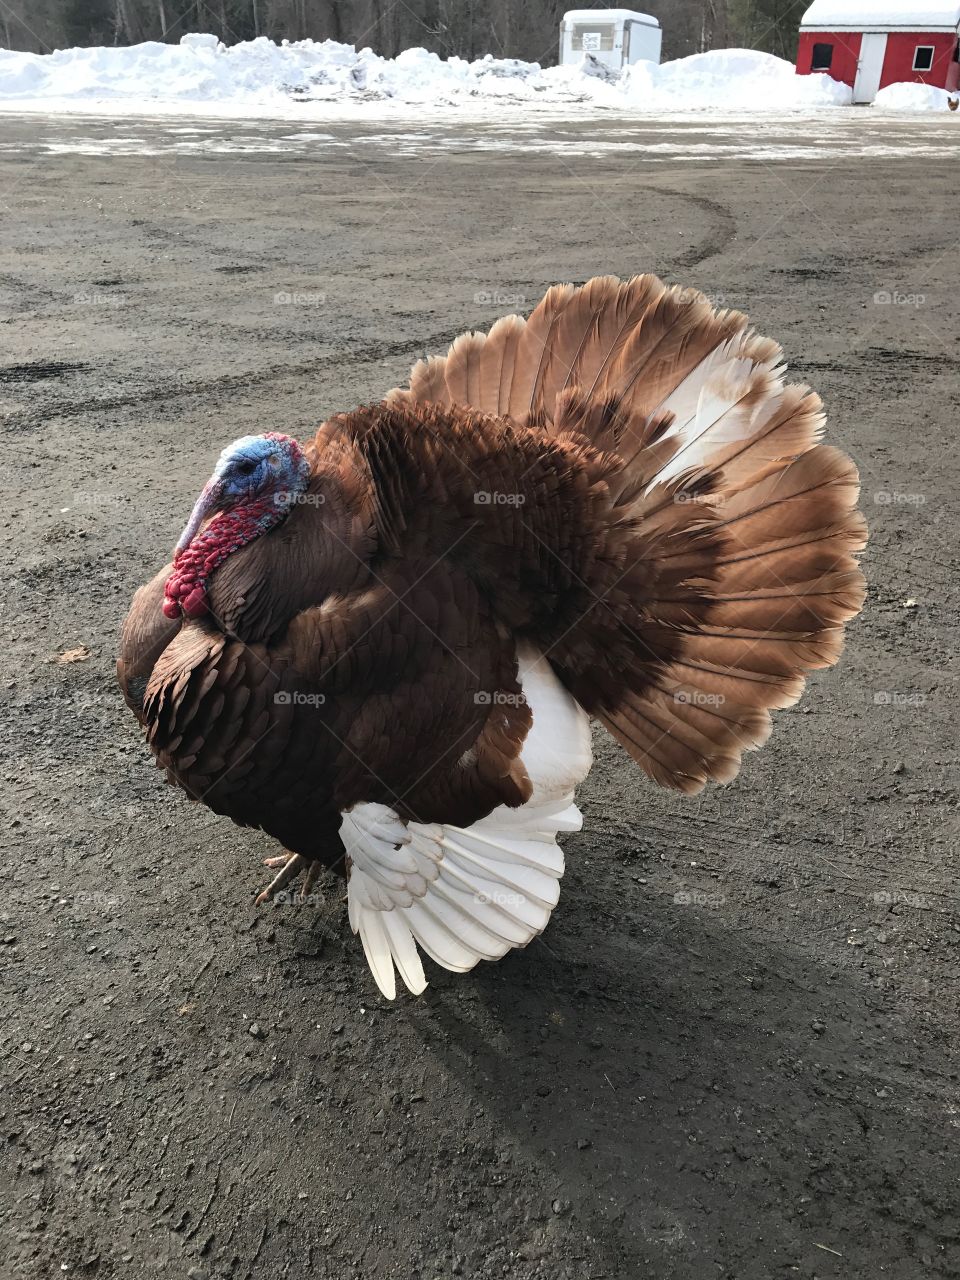 Turkey on the road